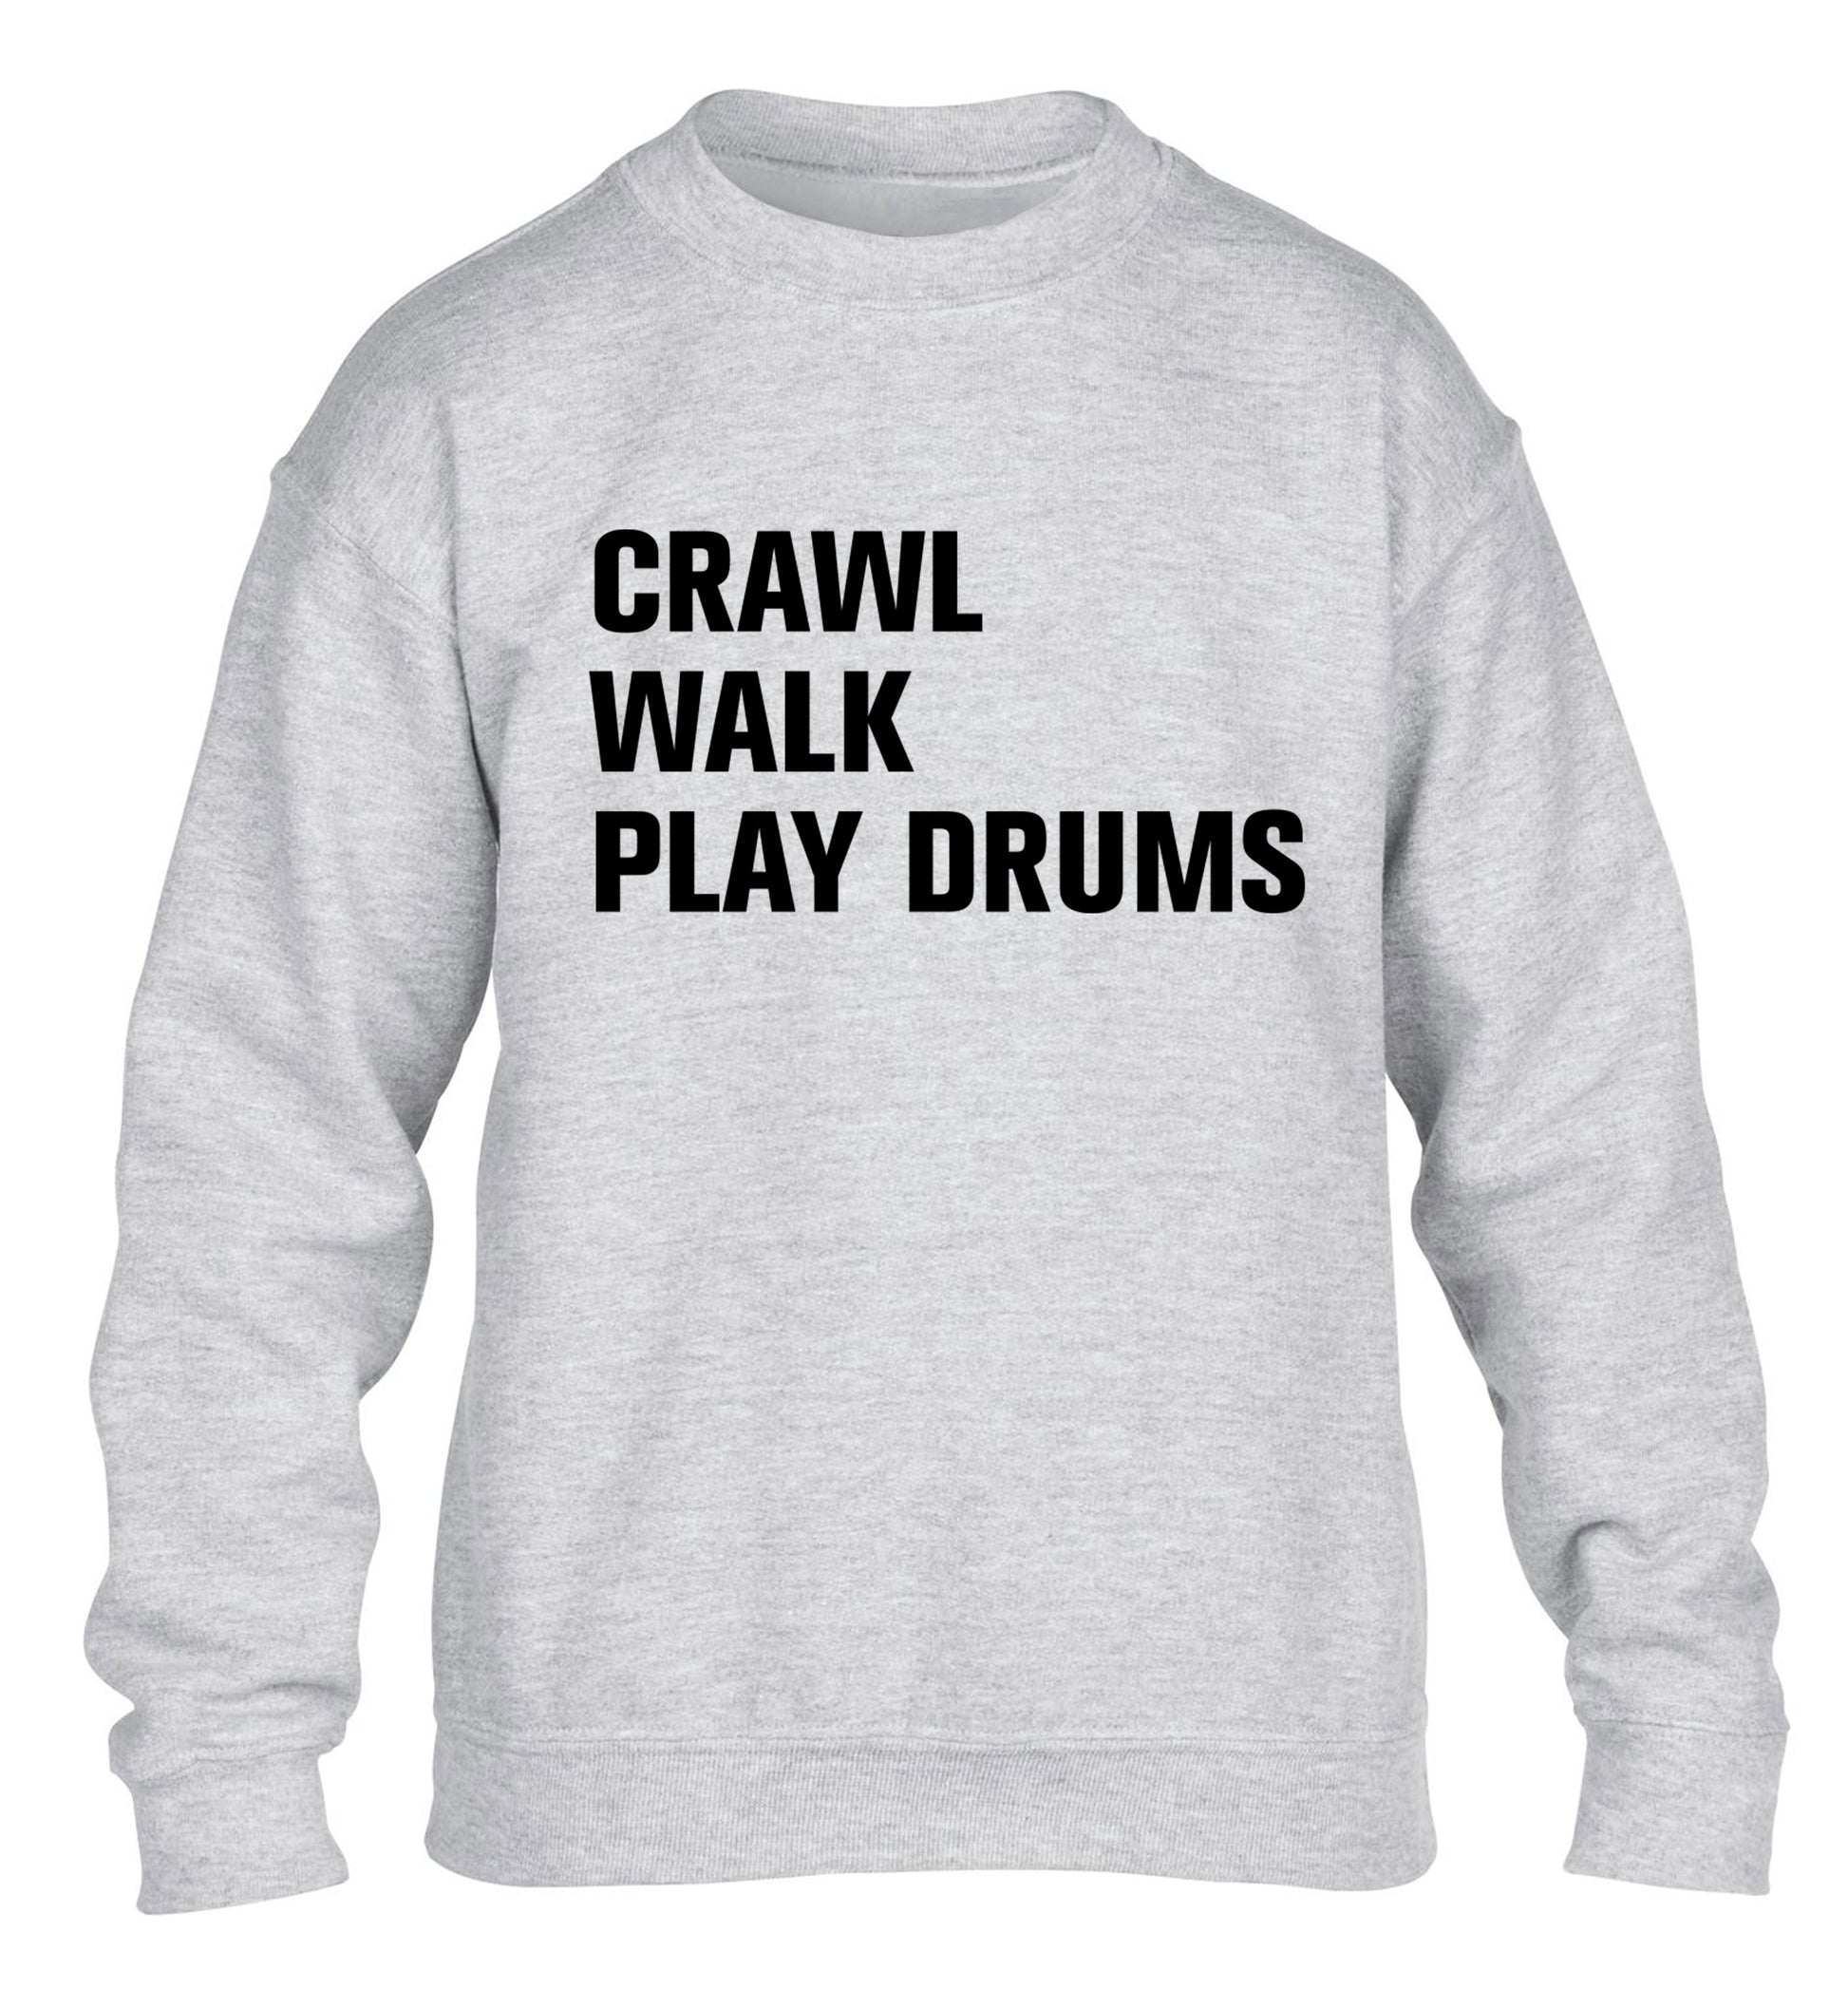 Crawl walk play drums children's grey sweater 12-13 Years